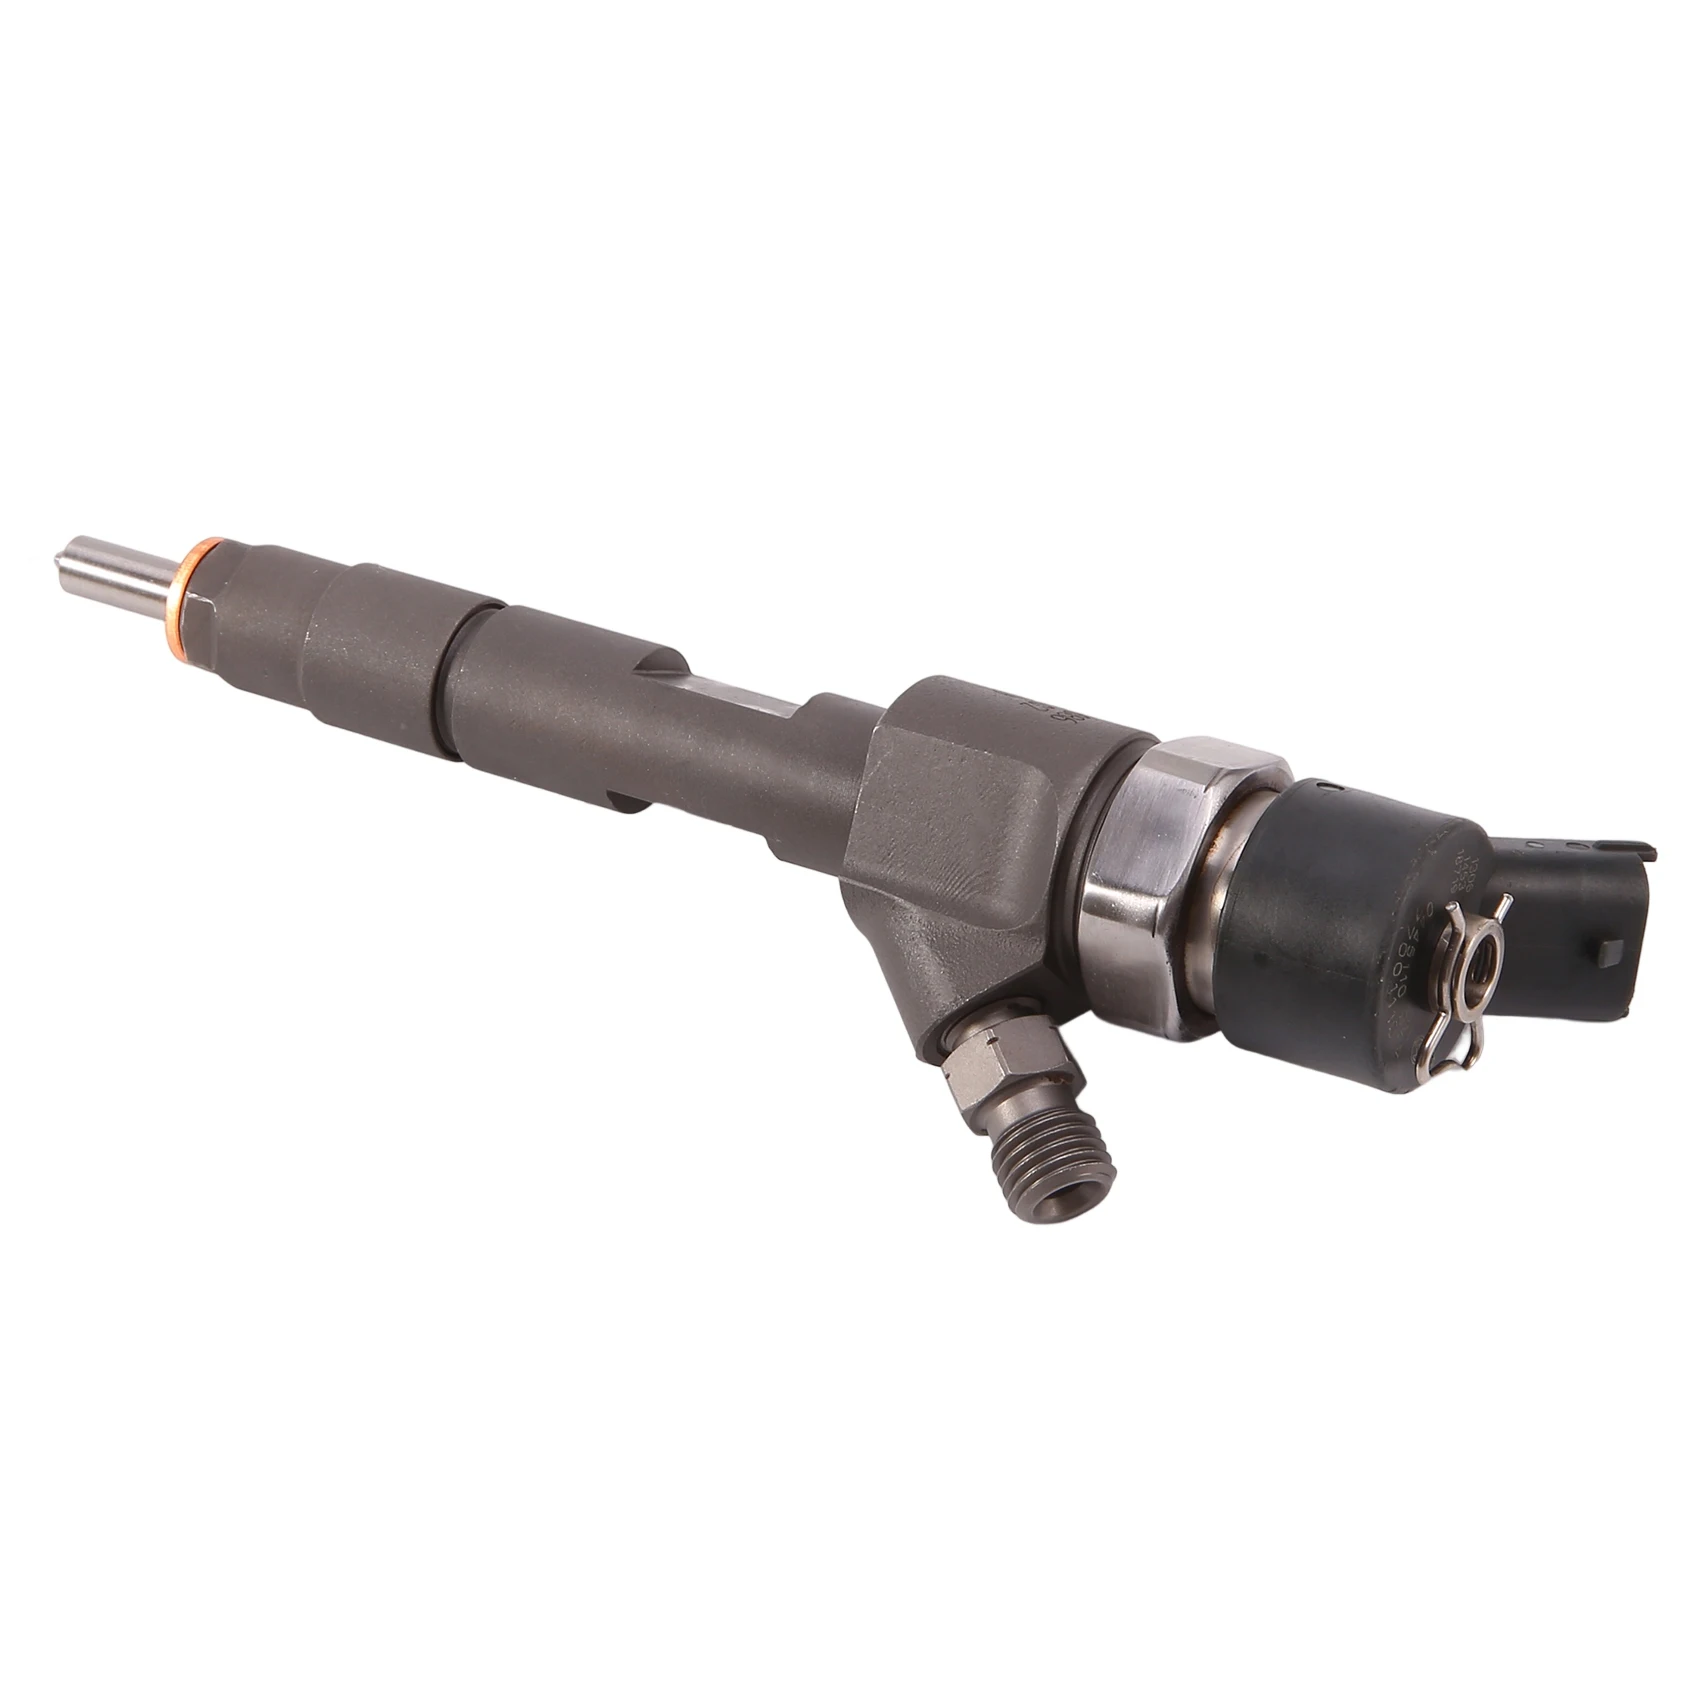 

New Diesel Fuel Common Rail Injector Nozzle for Renault Trafic Megane Laguna Vauxhall Opel Vivaro 1.9DCI 0445110146